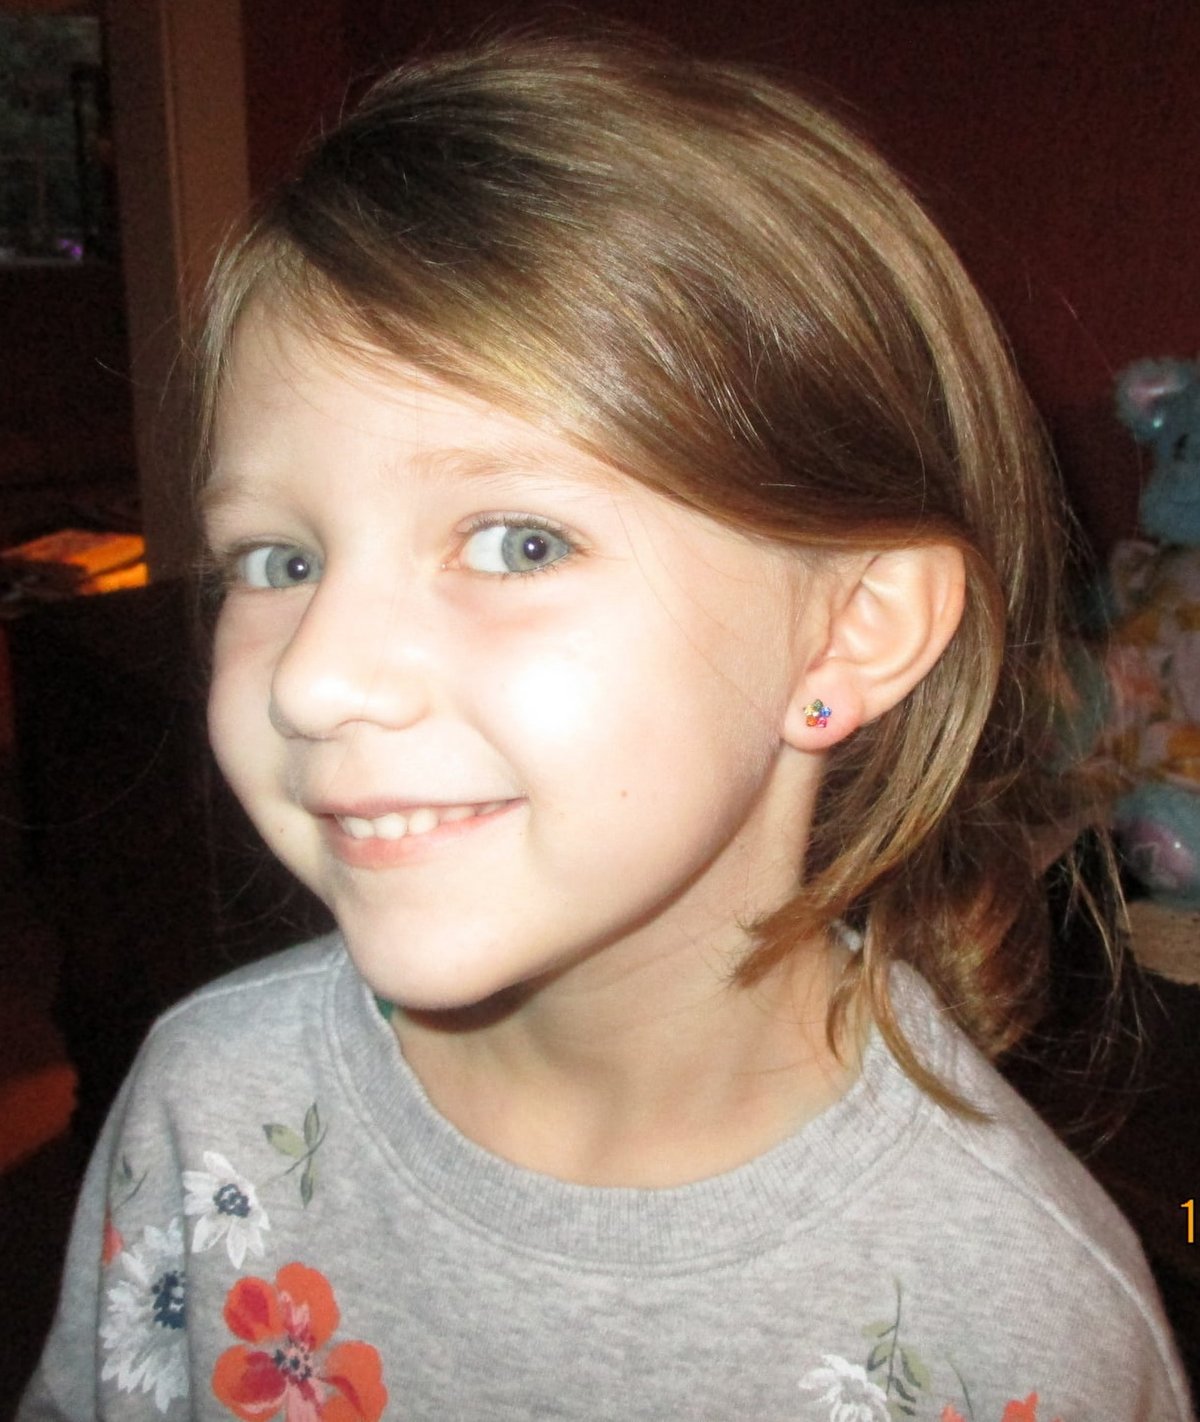 6th birthday new ear piercing.jpg